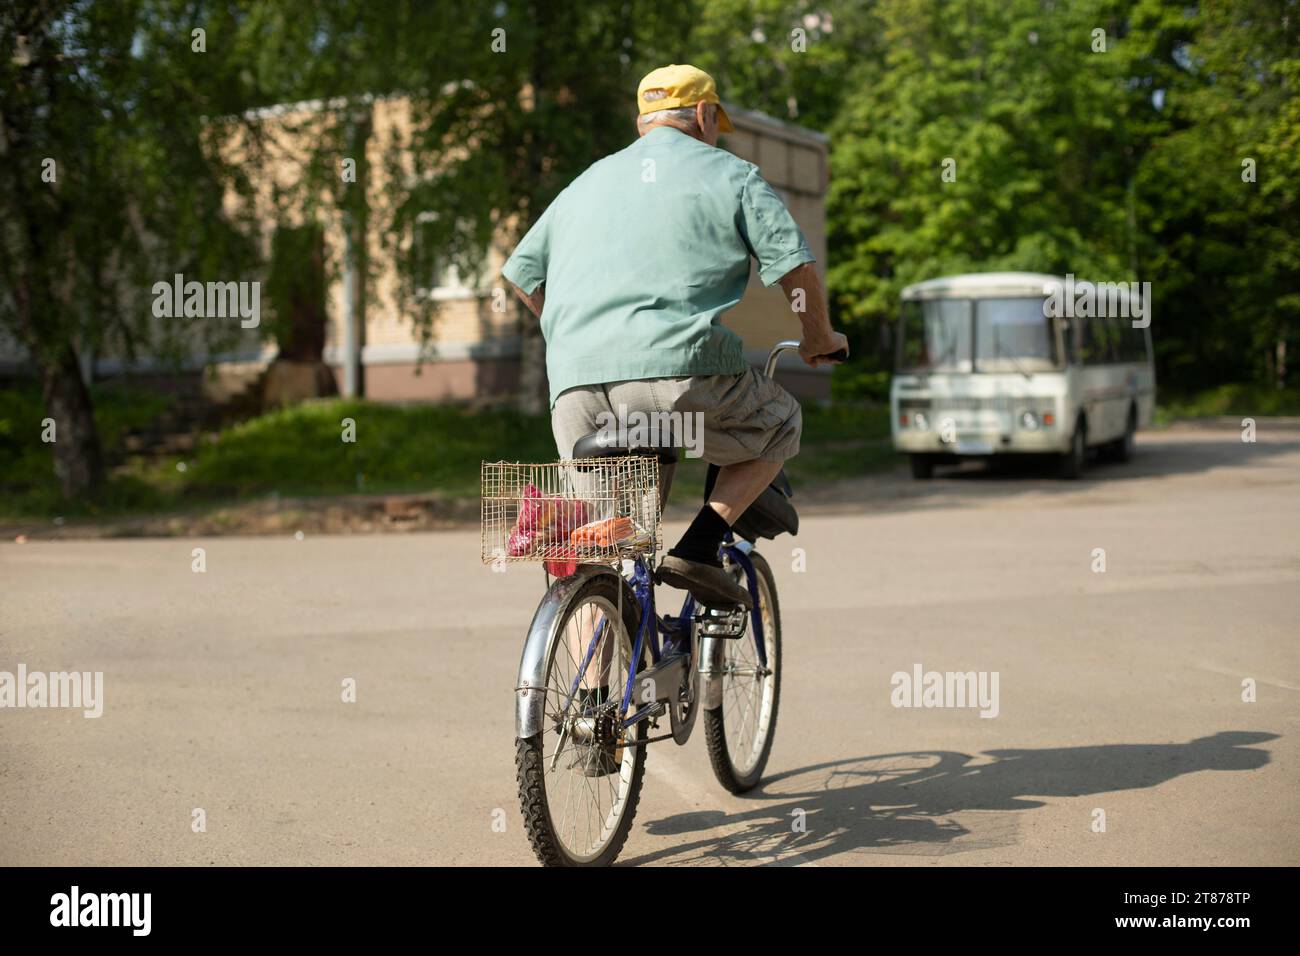 Elderly man on bicycle. Old man rides bicycle. Man in town. Pensioner rides down street. Stock Photo